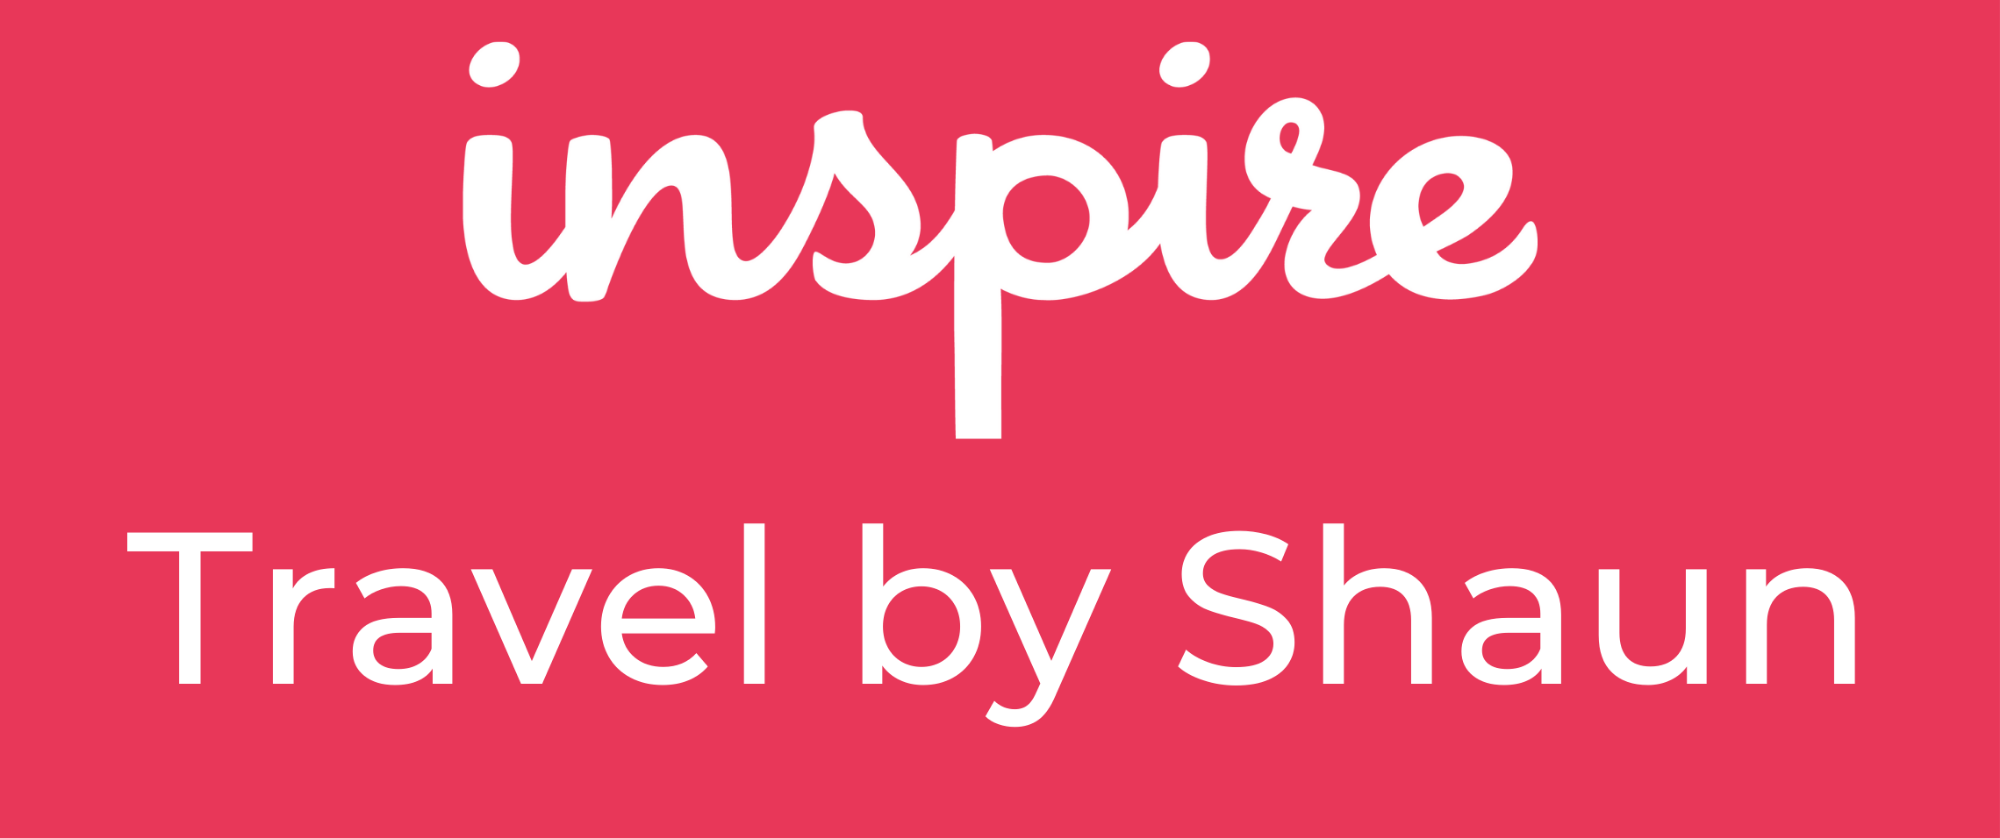 inspire travel by shaun photos